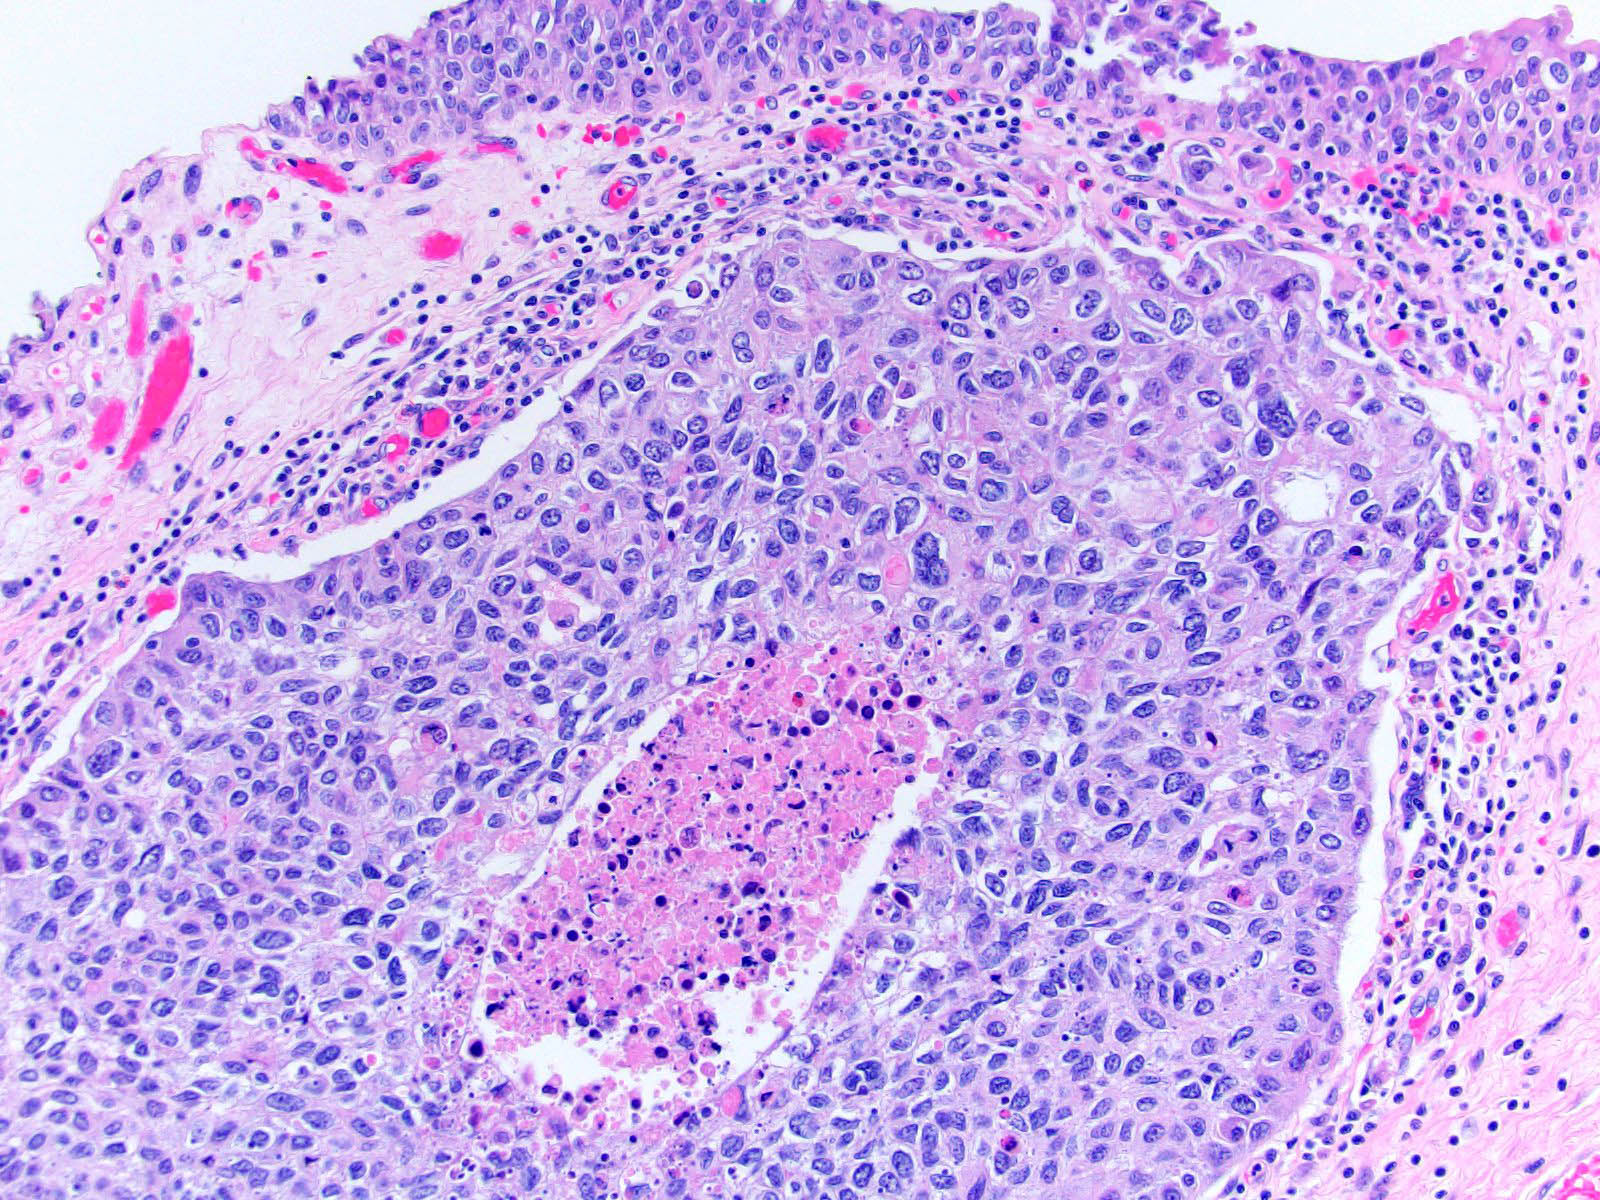 urothelial carcinoma prostate pathology outlines